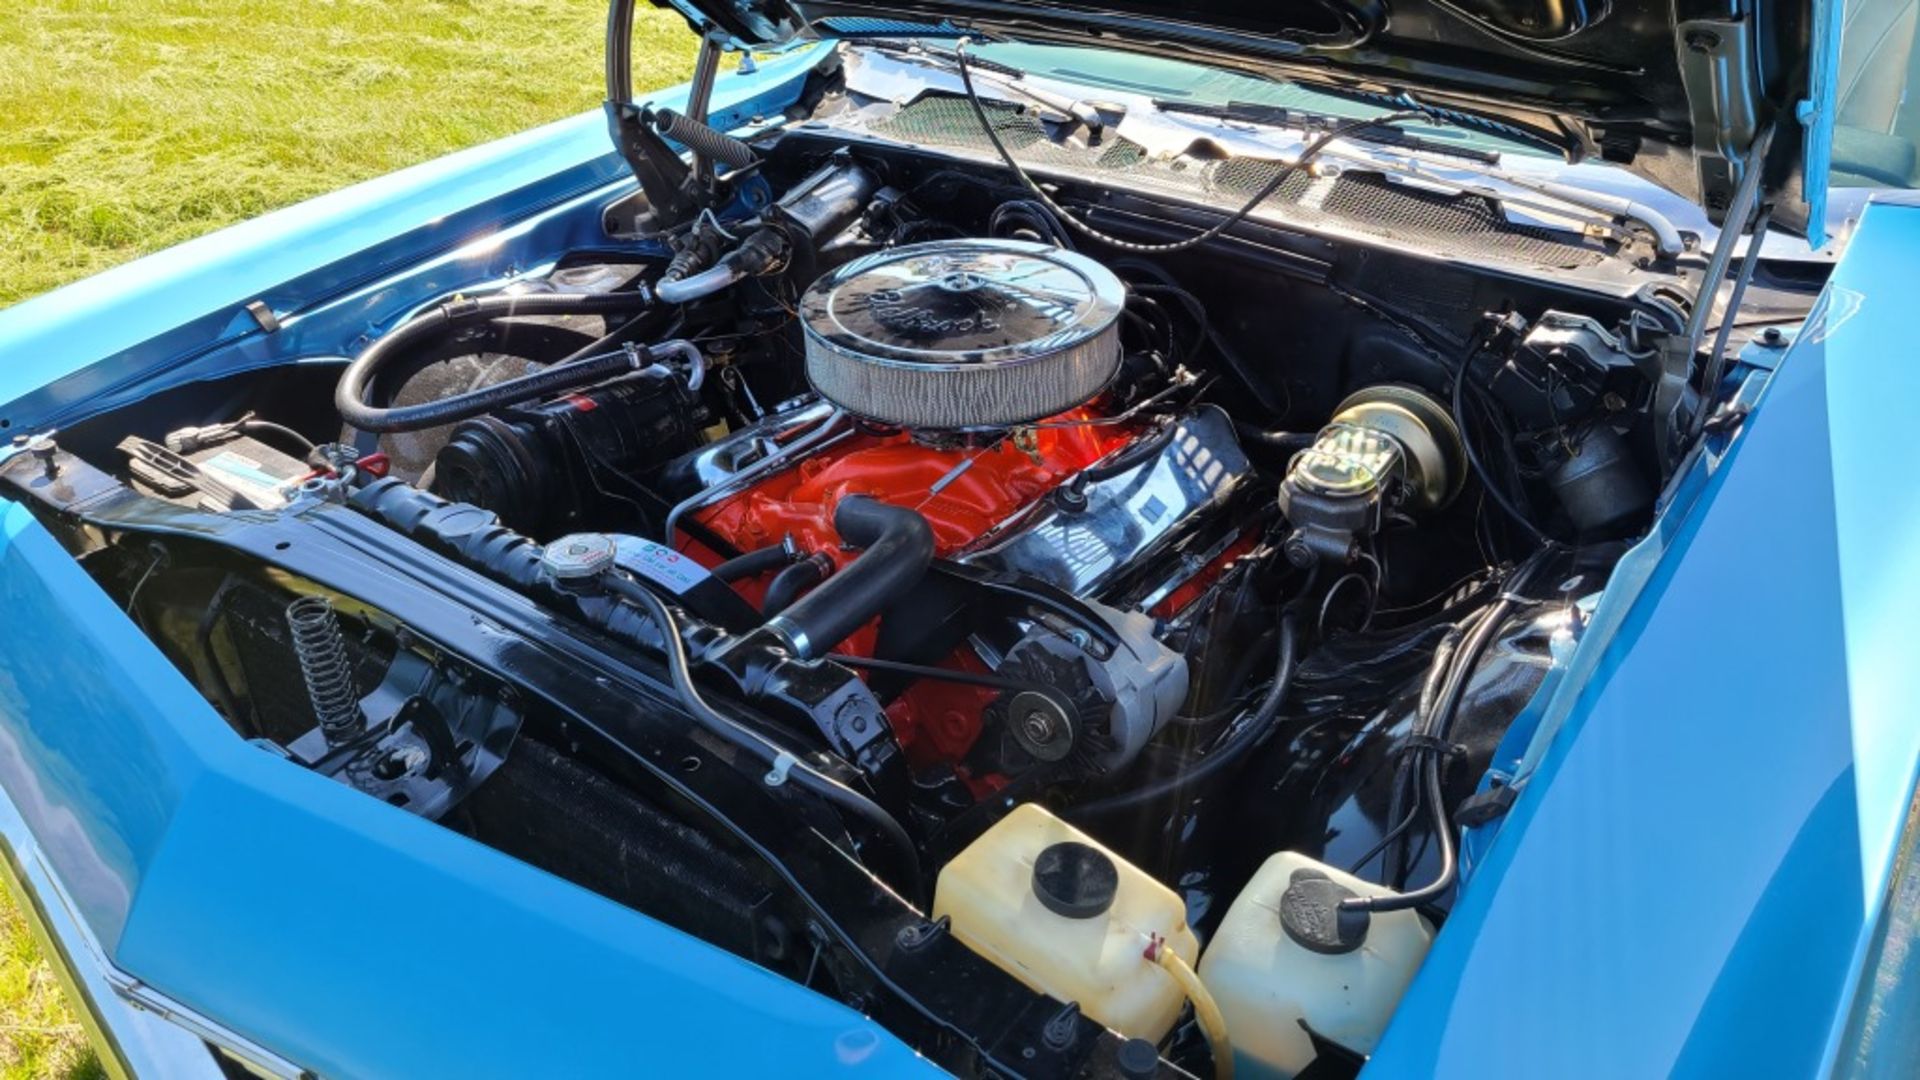 1968 Chevy Impala Ss - Image 14 of 15